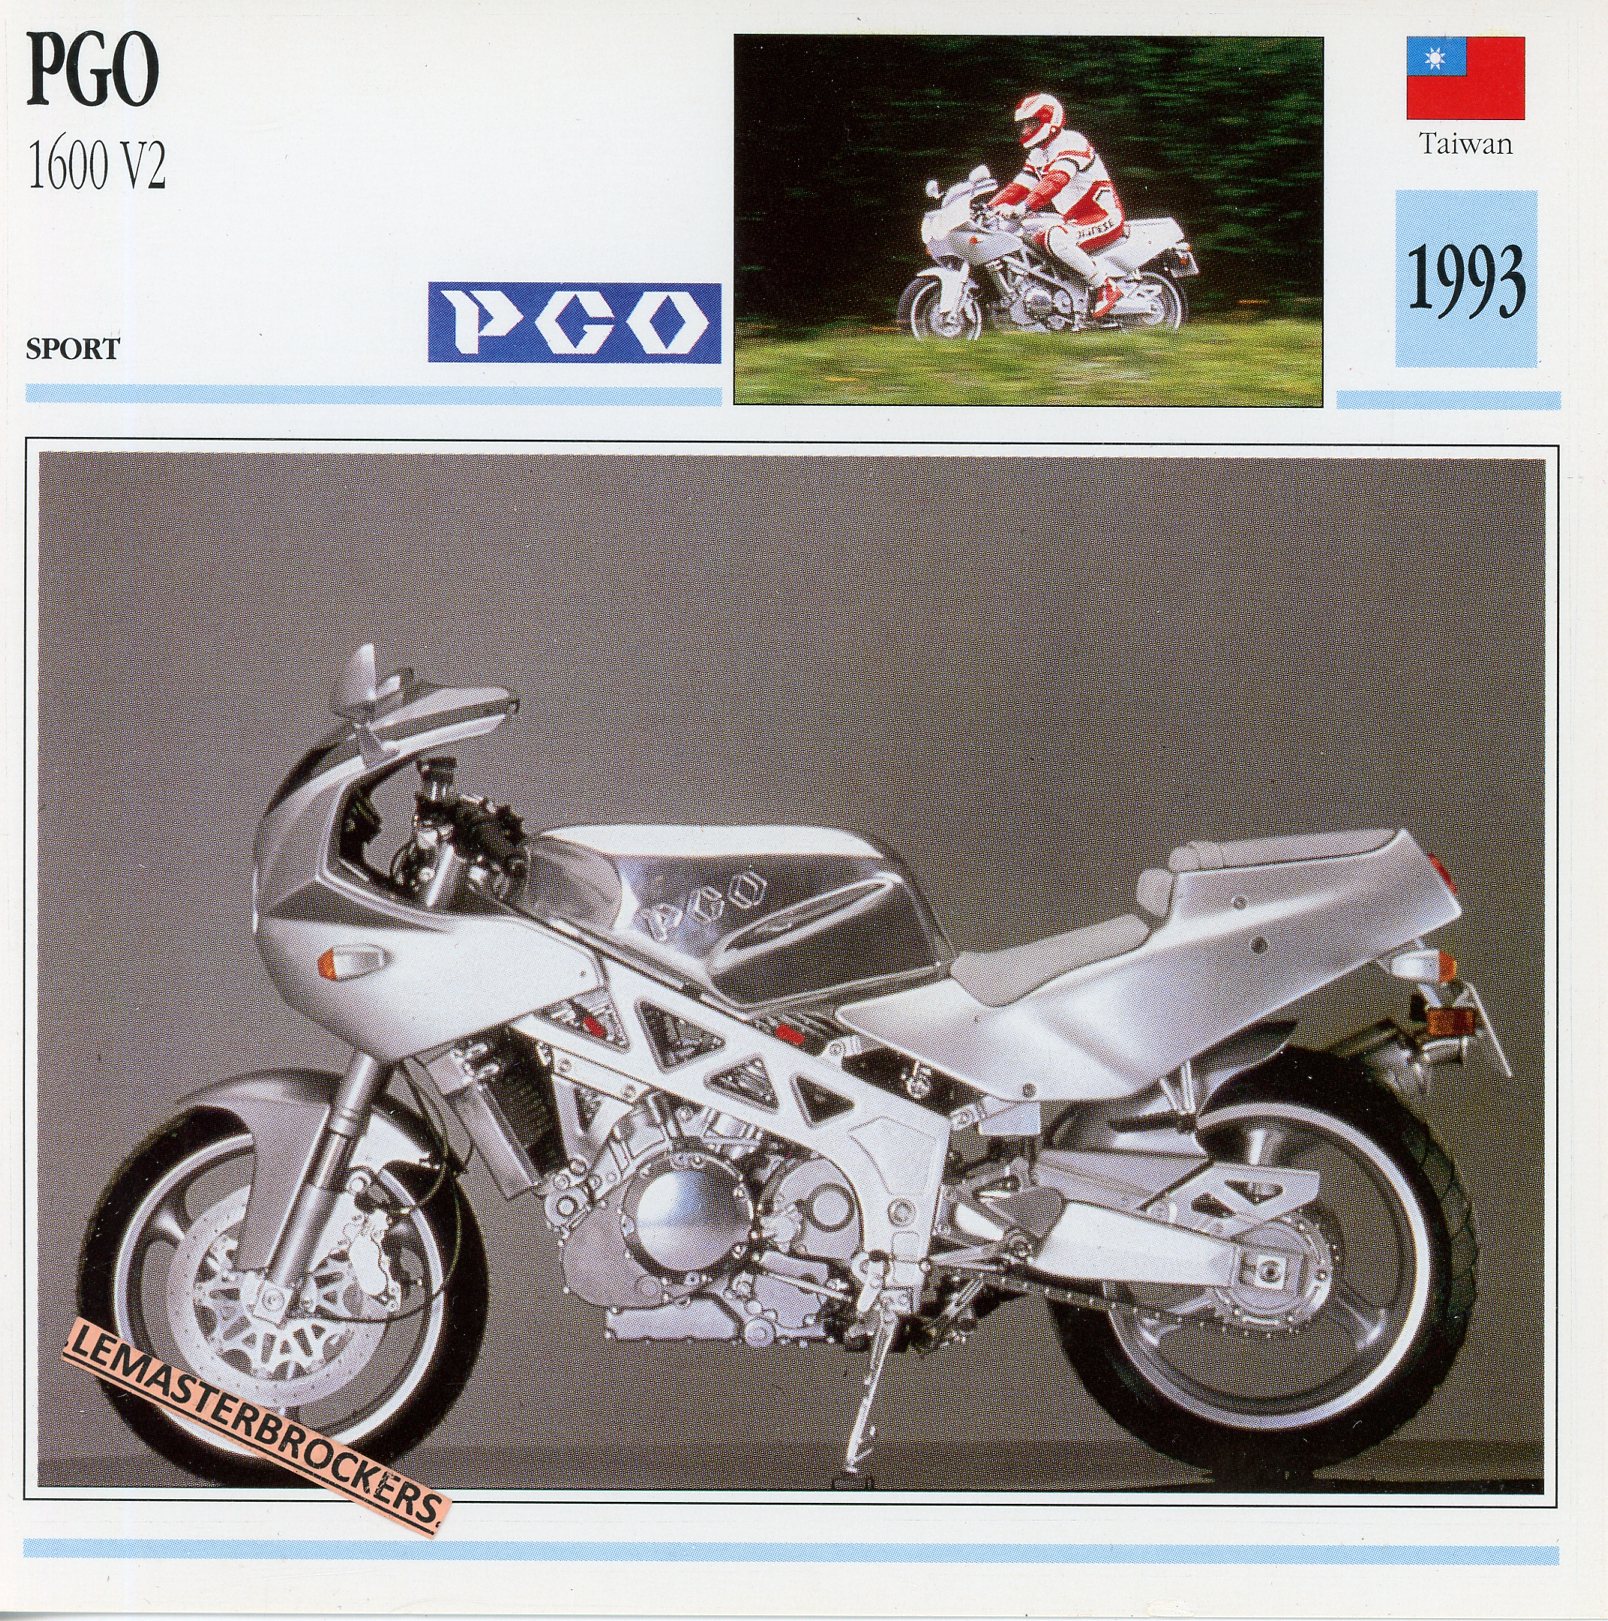 PGO-1600-V2-1993-LEMASTERBROCKERS-FICHE-MOTO-ATLAS-CARD